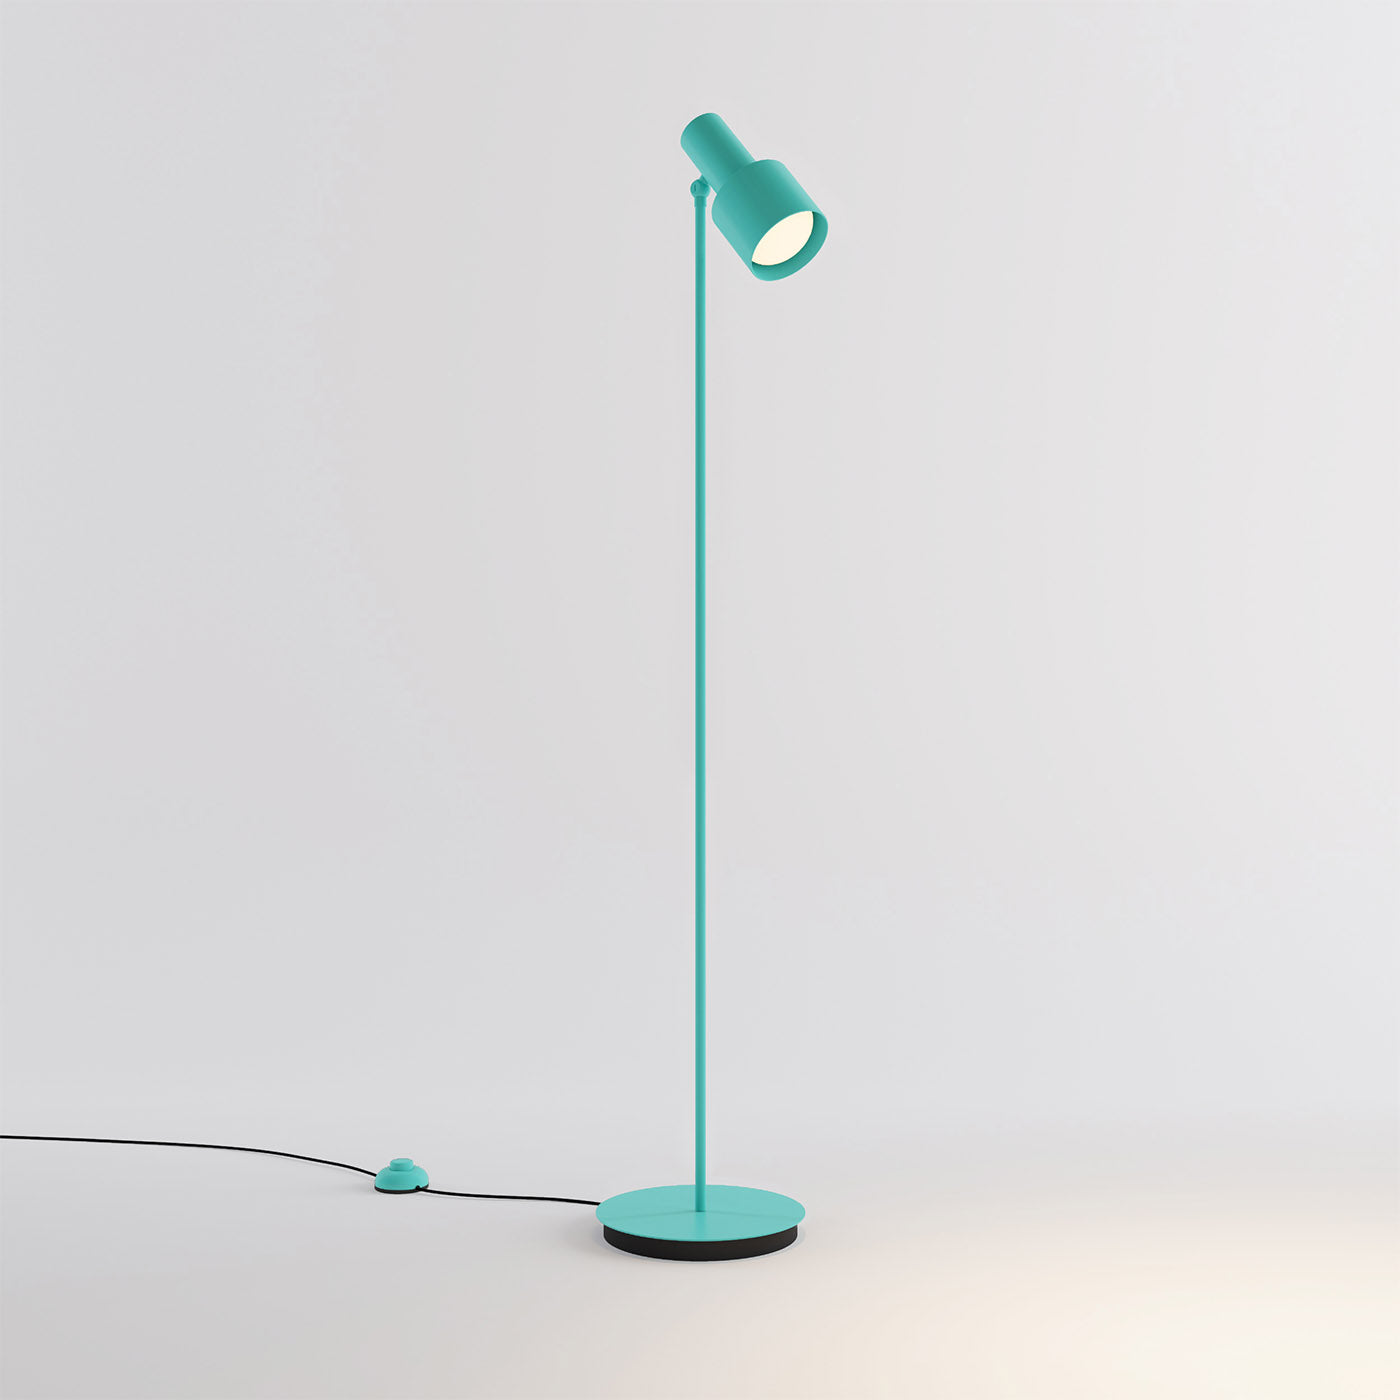 Light Gallery Luxury GP Light-Green Floor Lamp by Marco Pollice - Alternative view 1